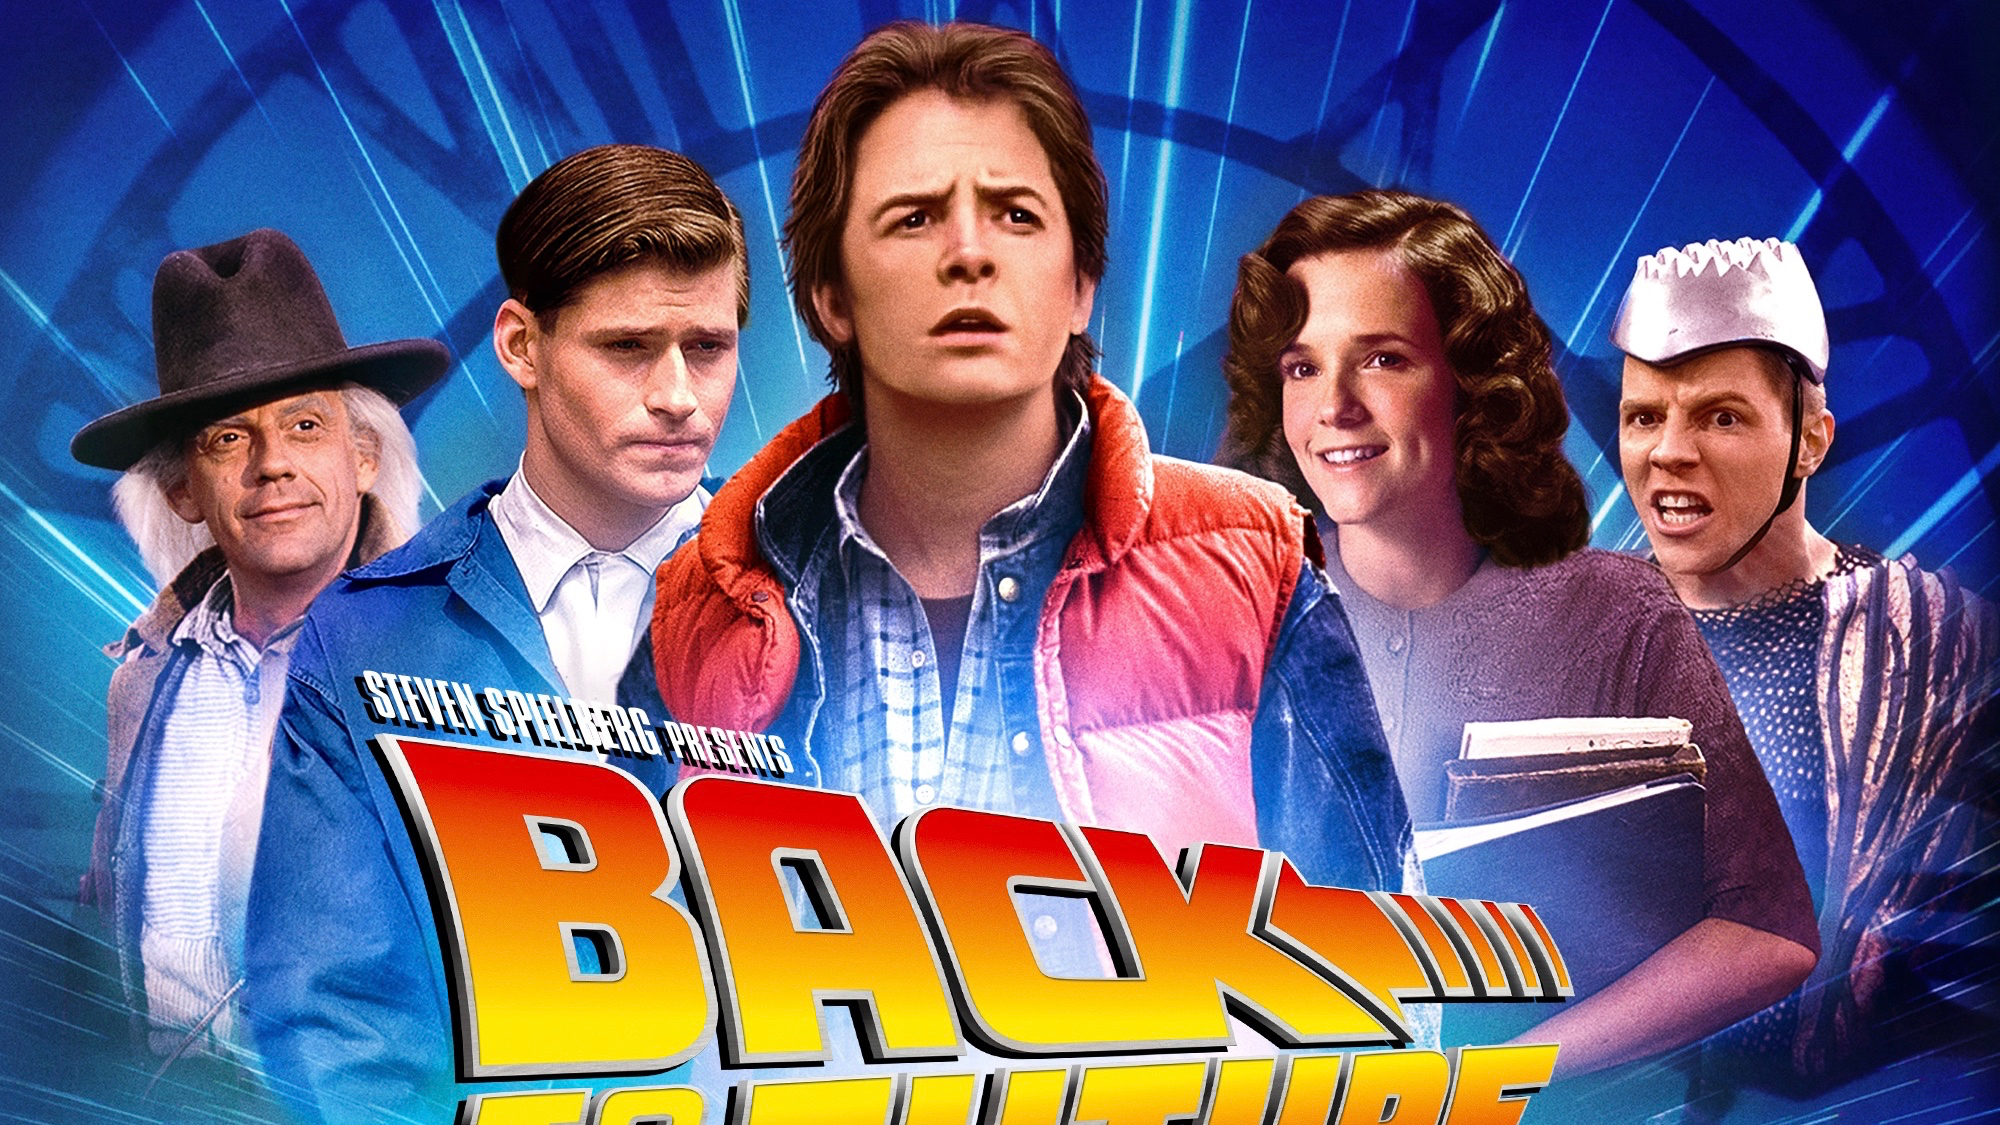 Back To The Future HD Wallpaper, Marty McFly, Dr. Emmett Brown, Michael J. Fox, Christopher Lloyd HD Wallpaper